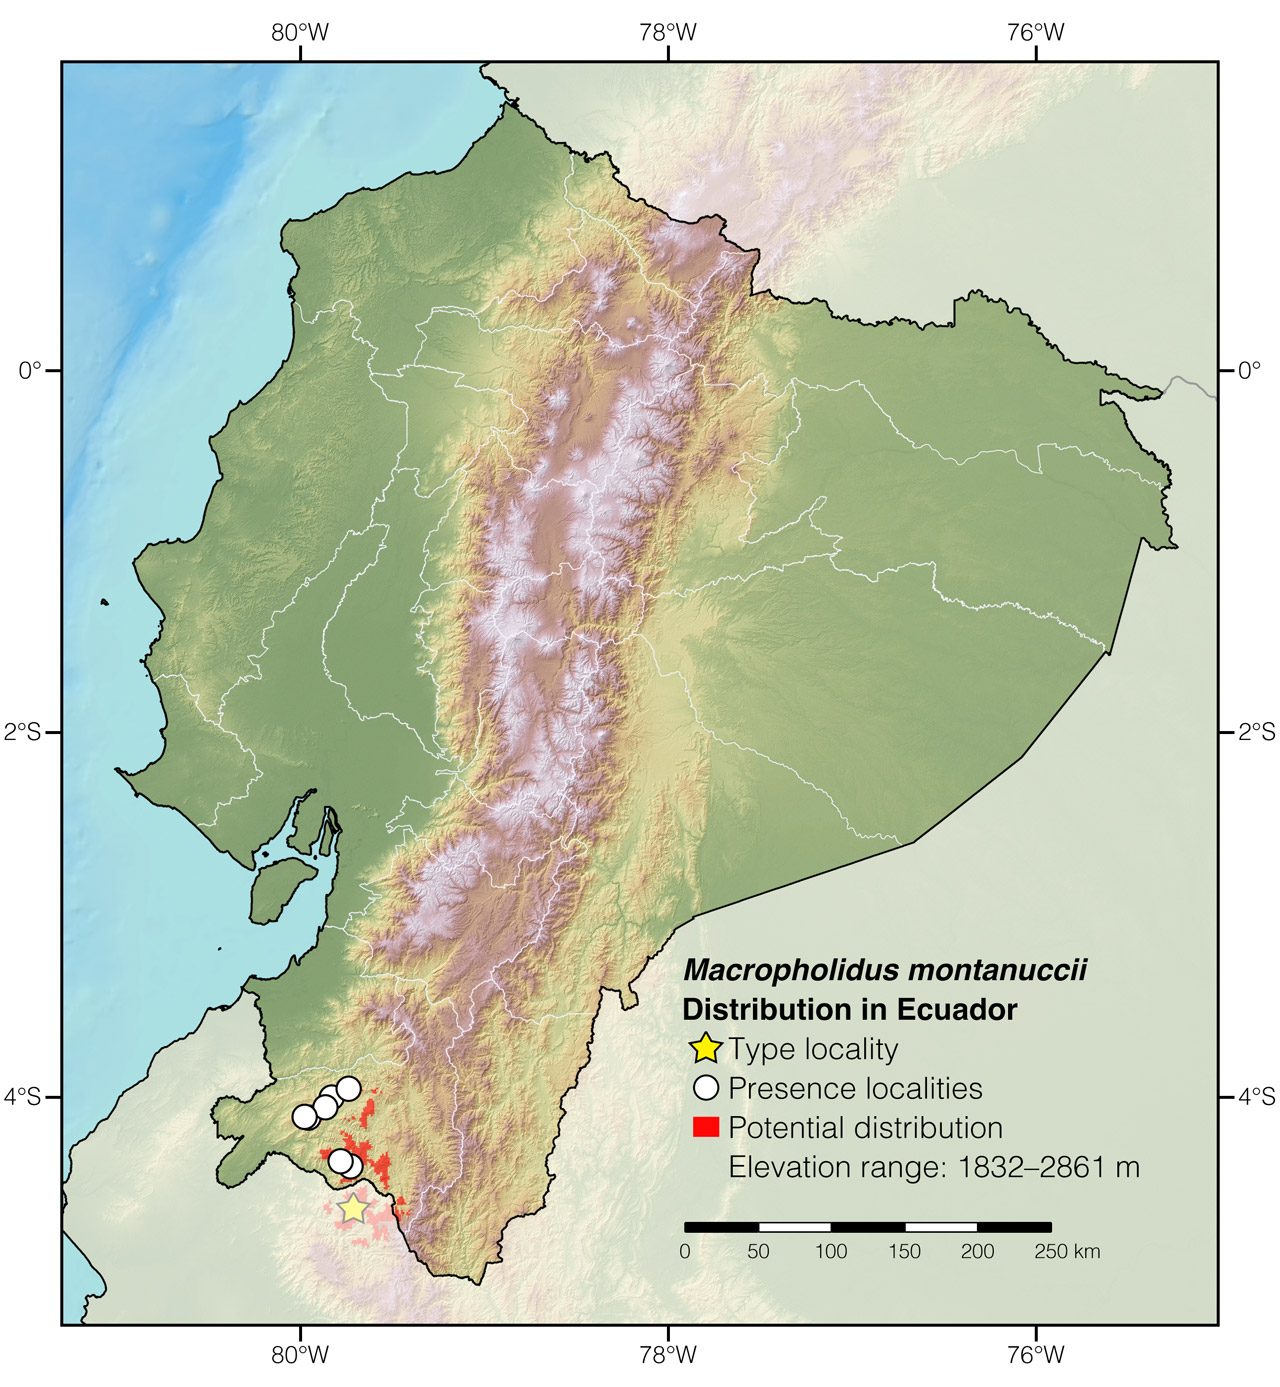 Distribution of Macropholidus montanuccii in Ecuador